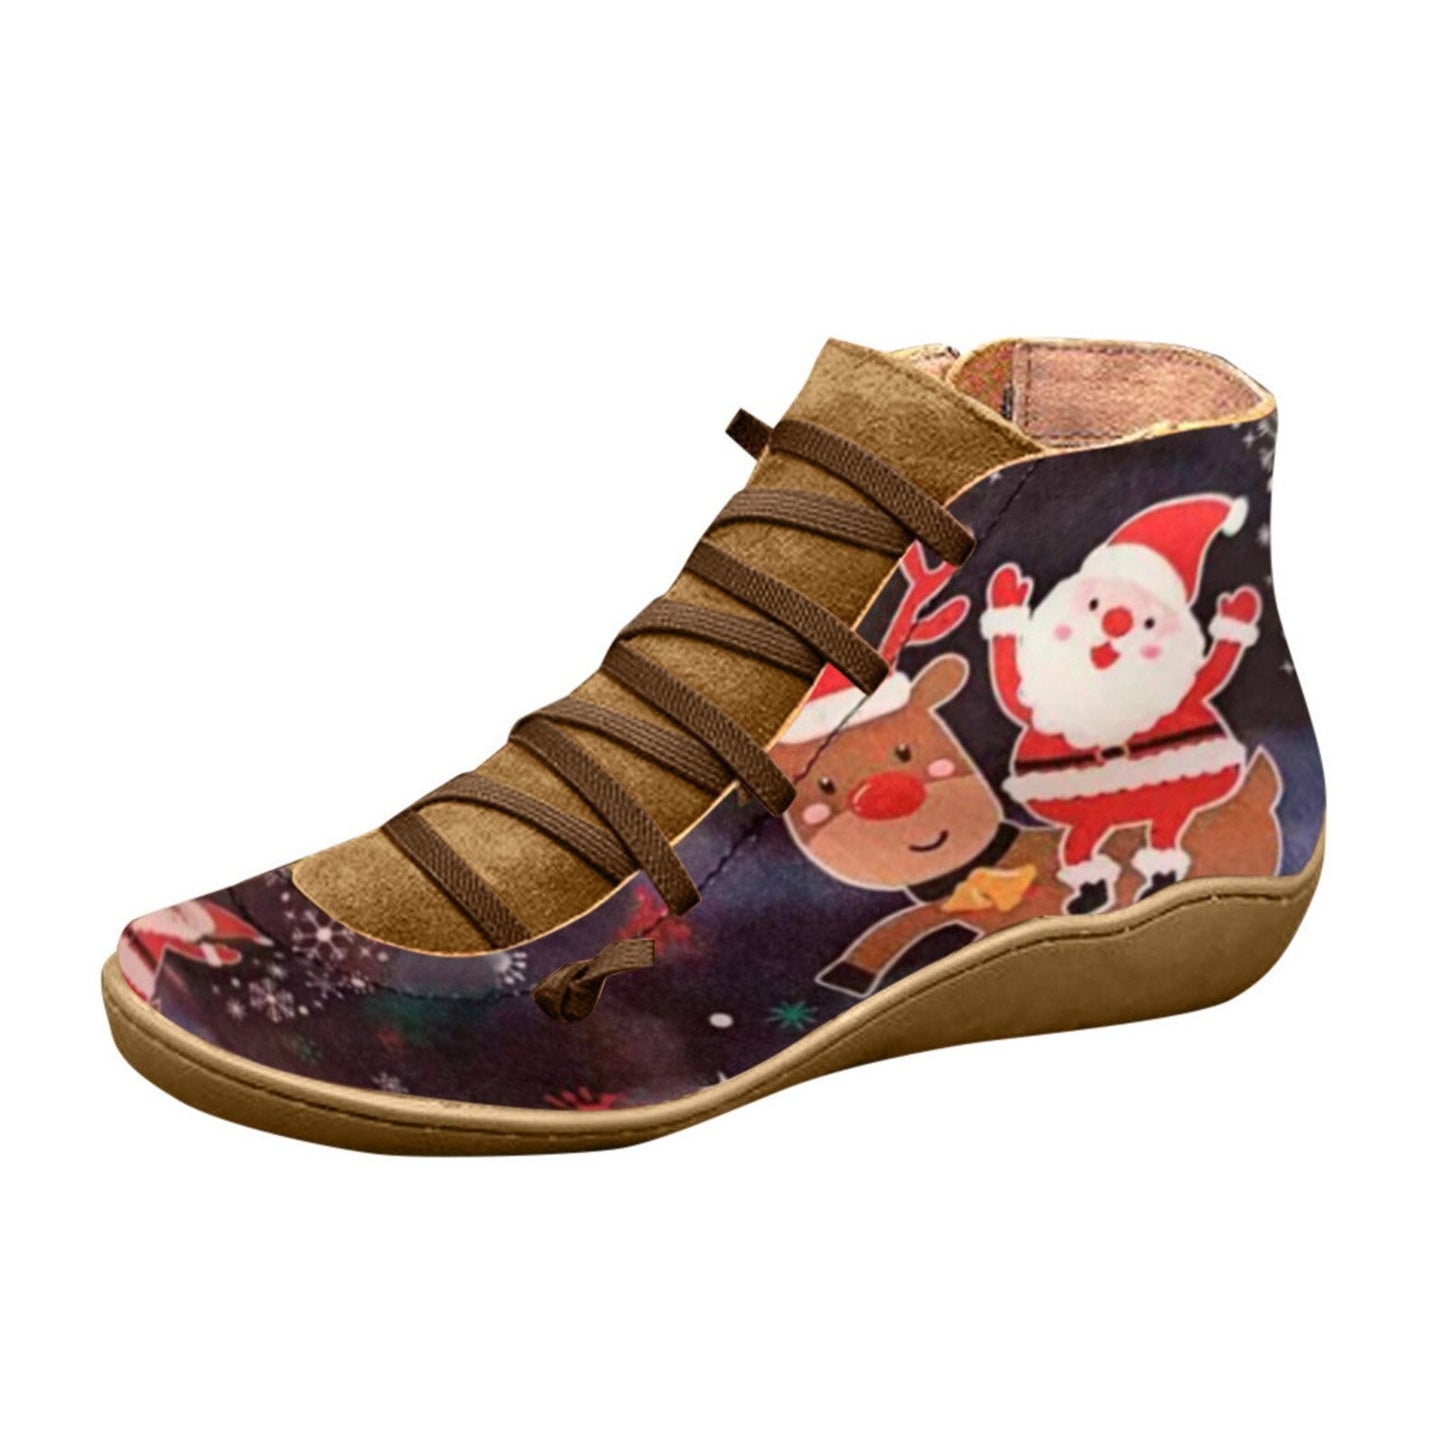 Groovywish Women Boots Leather Chrismas Santa Orthopedic Shoes